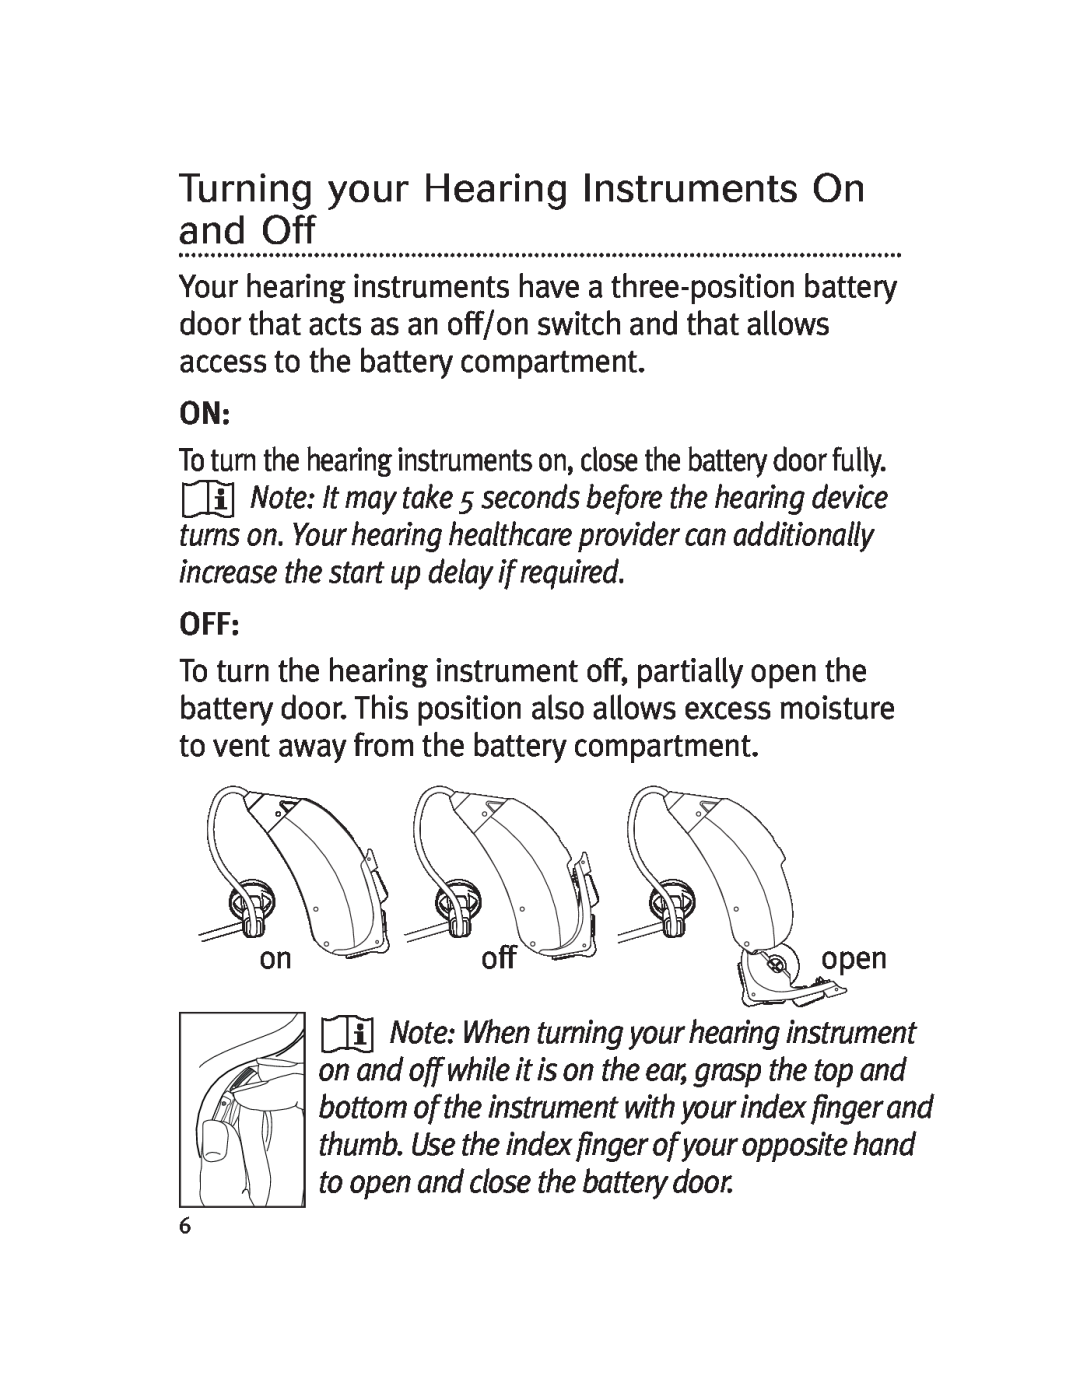 Unitron Hearing Aid Moxi 13, Moda 13 manual Turning your Hearing Instruments On and Off 